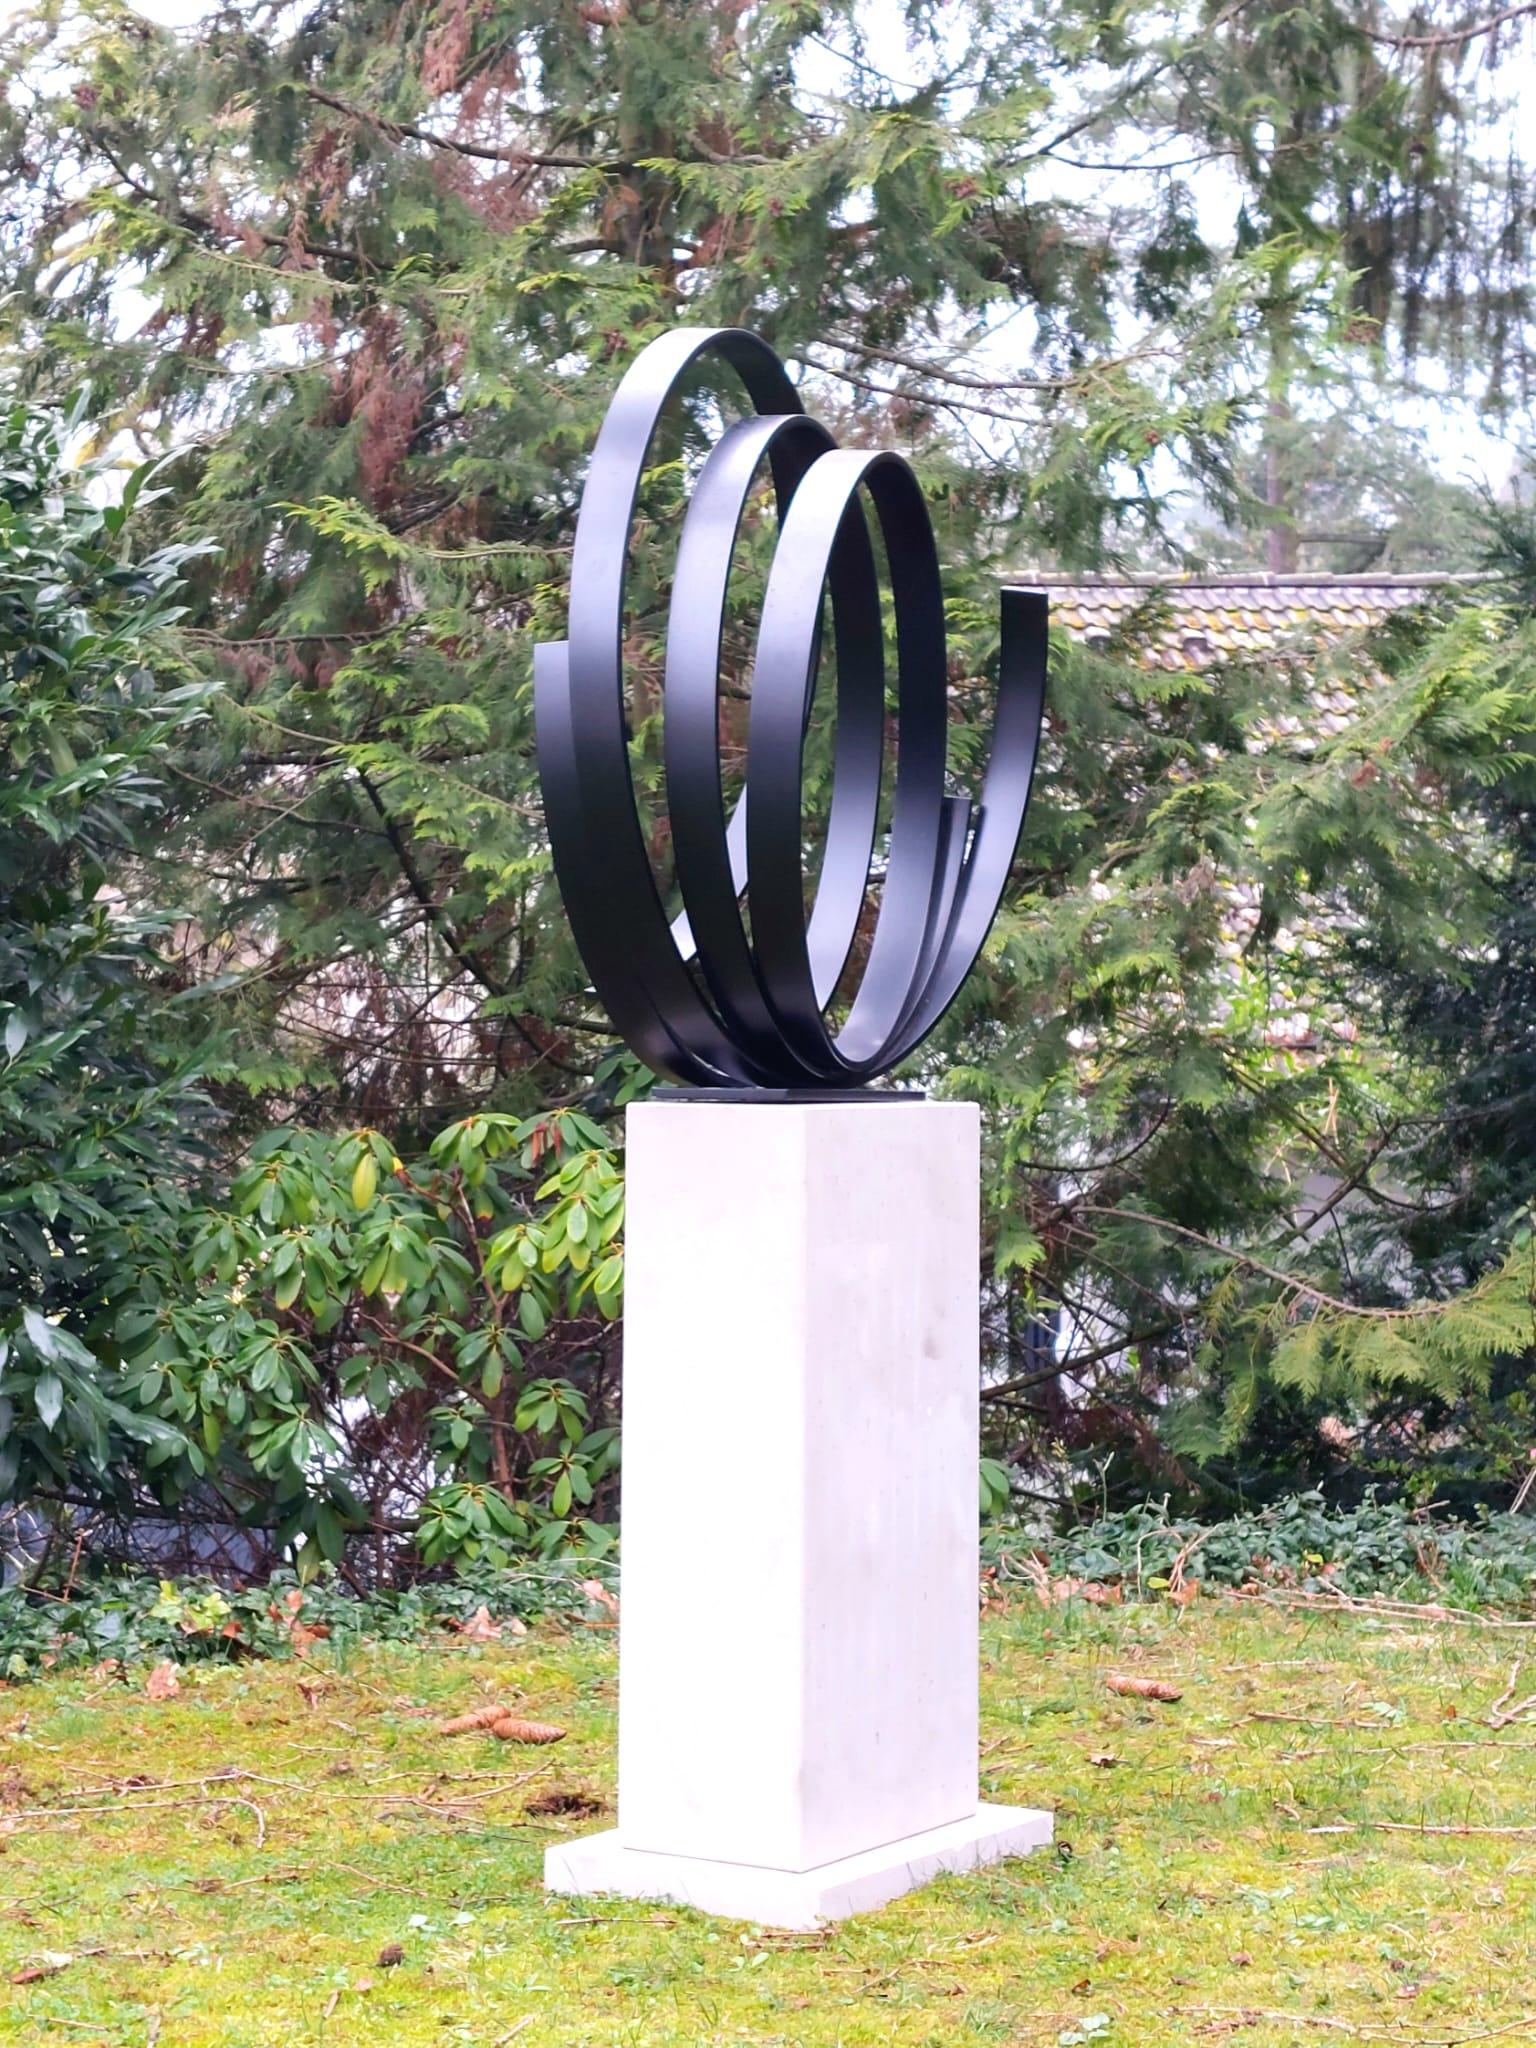 Black Orbit by Kuno Vollet - Large Contemporary Round Orbit sculpture  For Sale 4